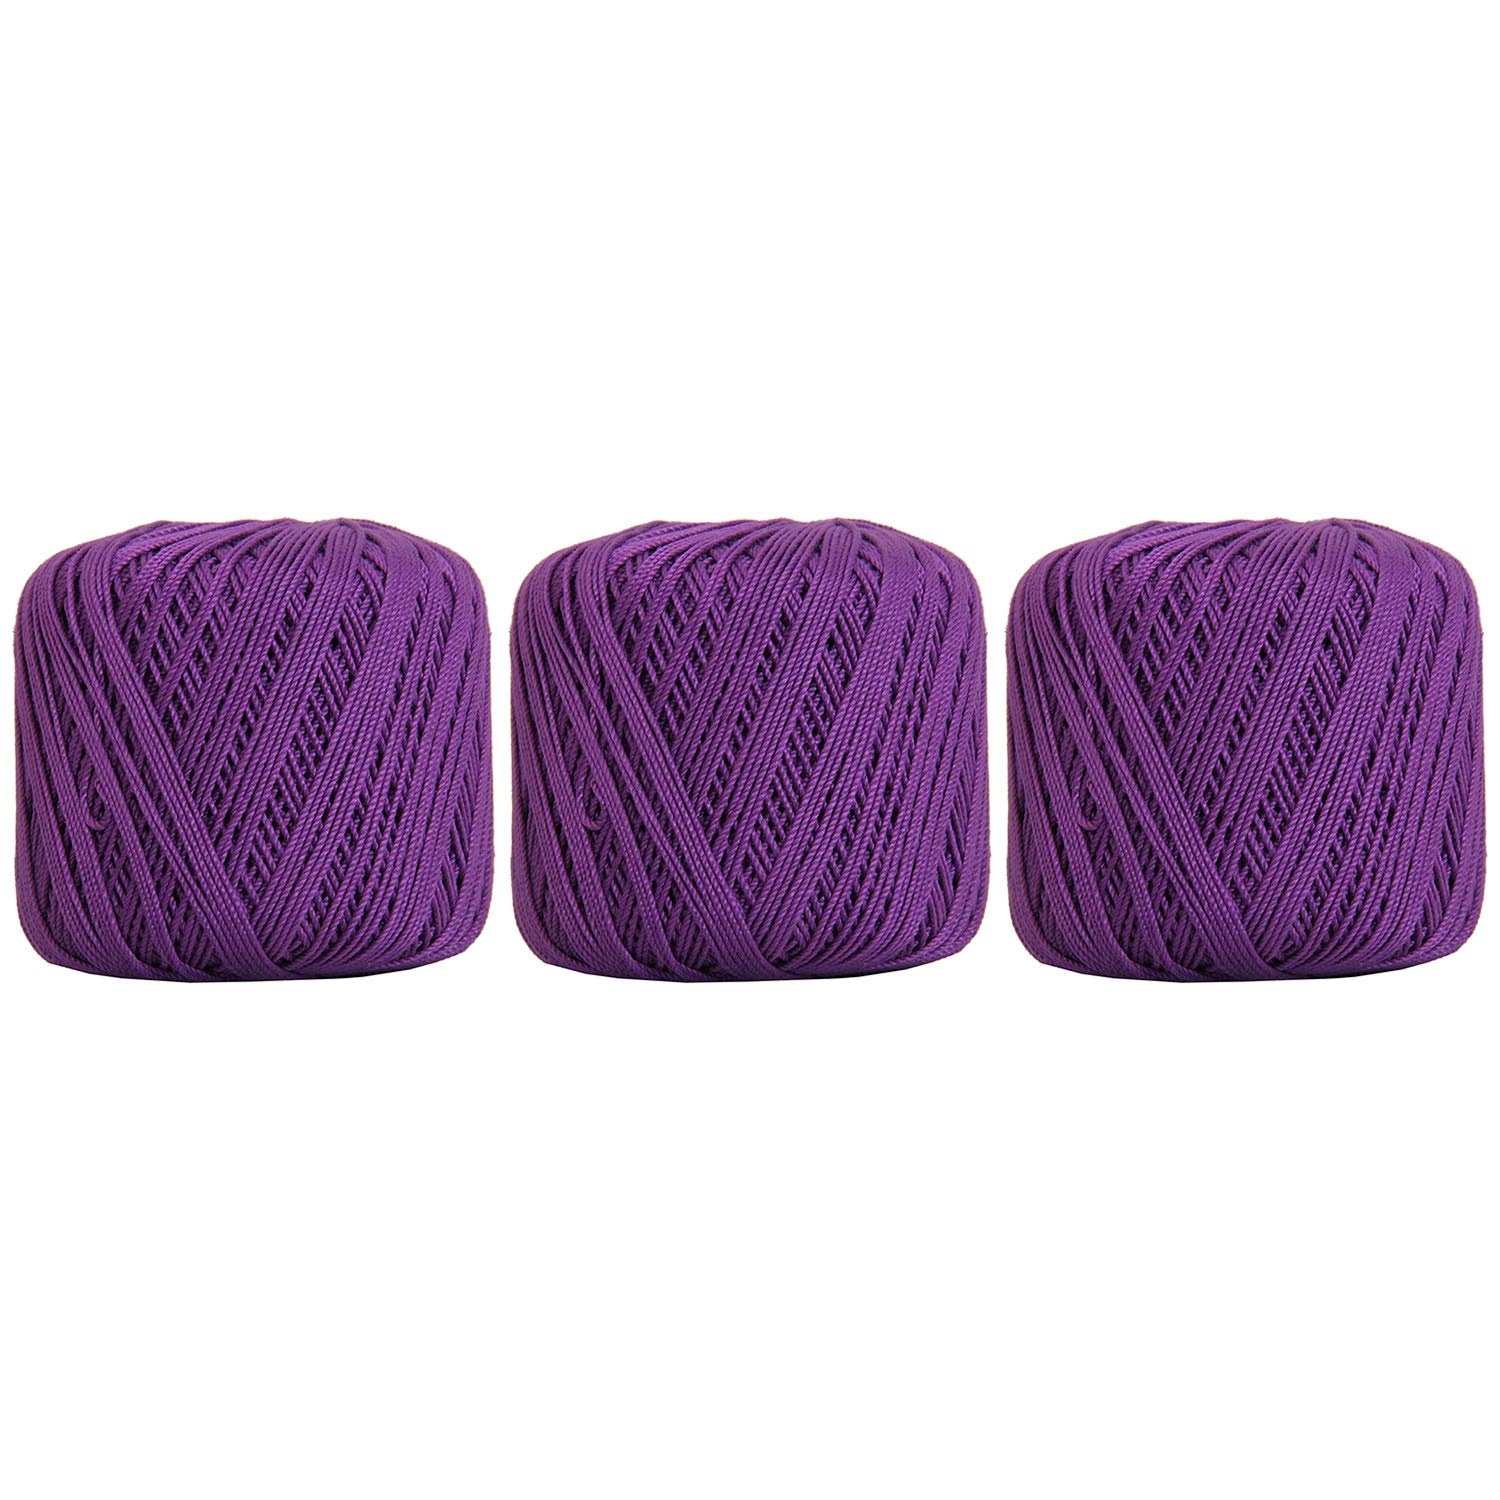 Threadart 3 Ball Pack Threadart 100 Pure Cotton Crochet Thread - Size 3 - Color 30 - Purple - Size 10 And 3 - Singles And Bulk Packs Avail